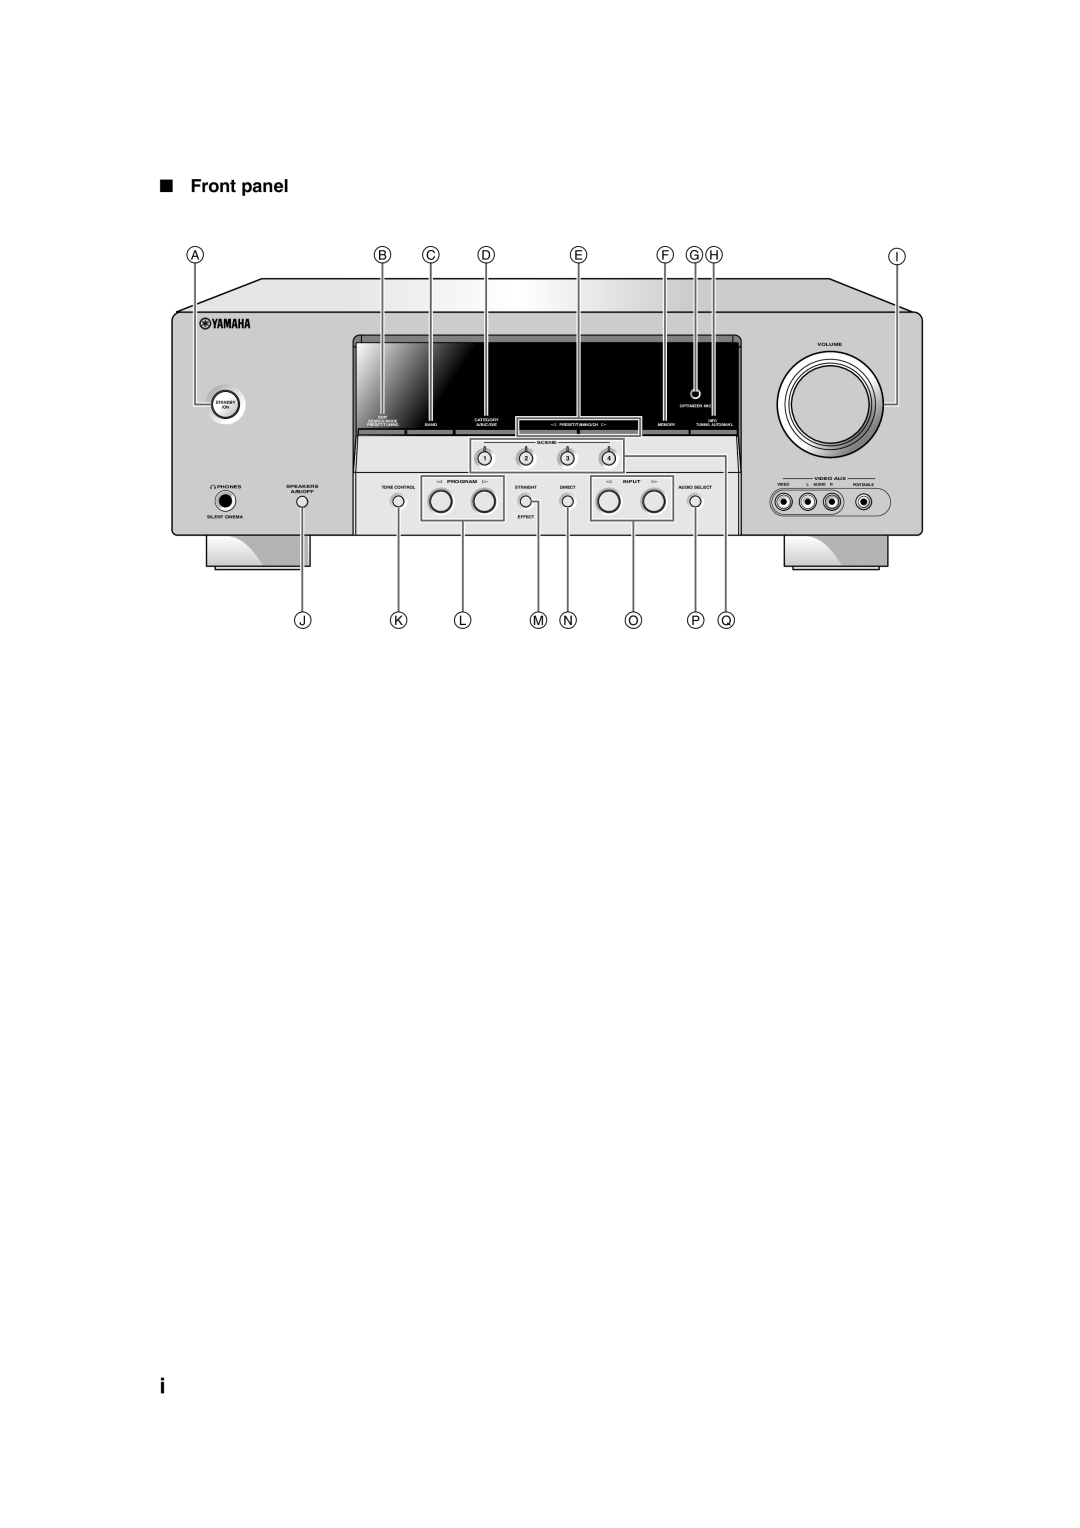 Yamaha HTR-6140 owner manual Front panel, B C D, F Gh, K L M N O P Q 